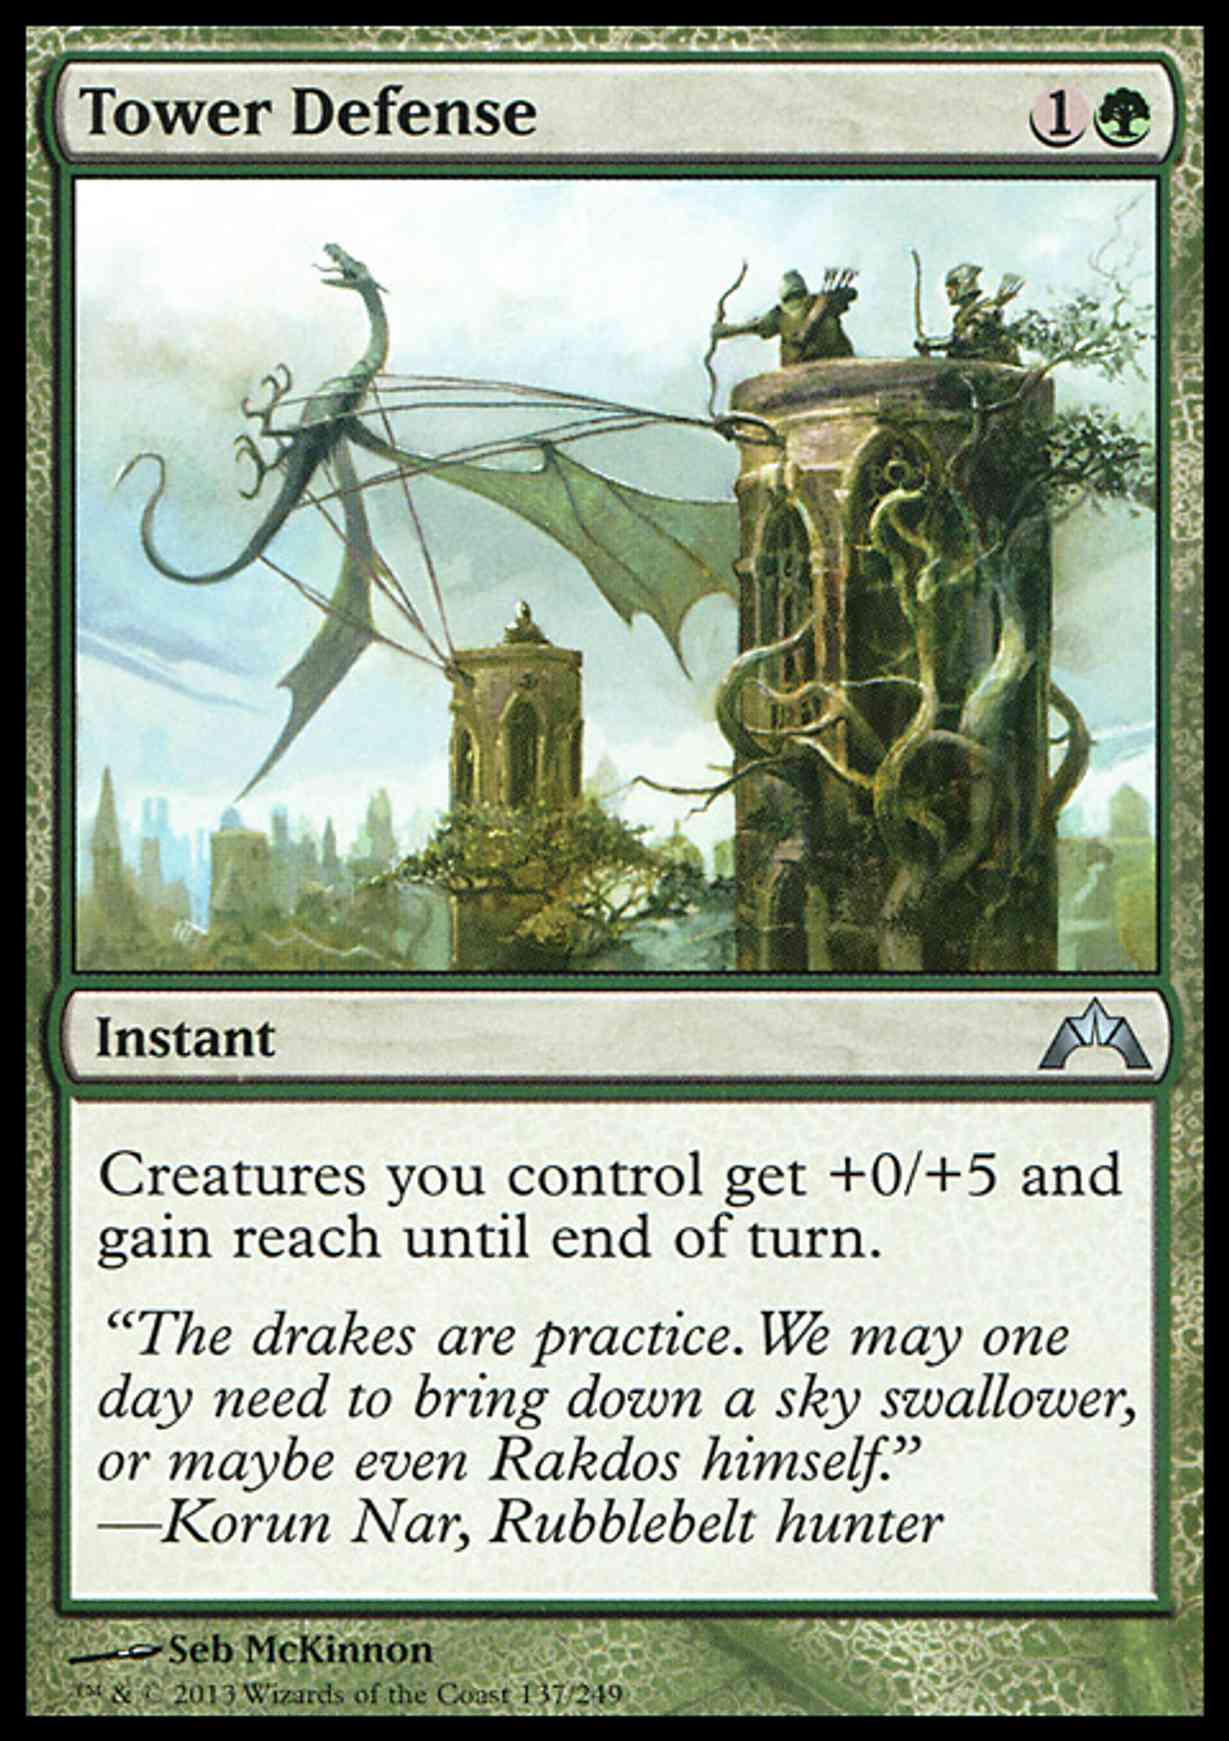 Tower Defense magic card front